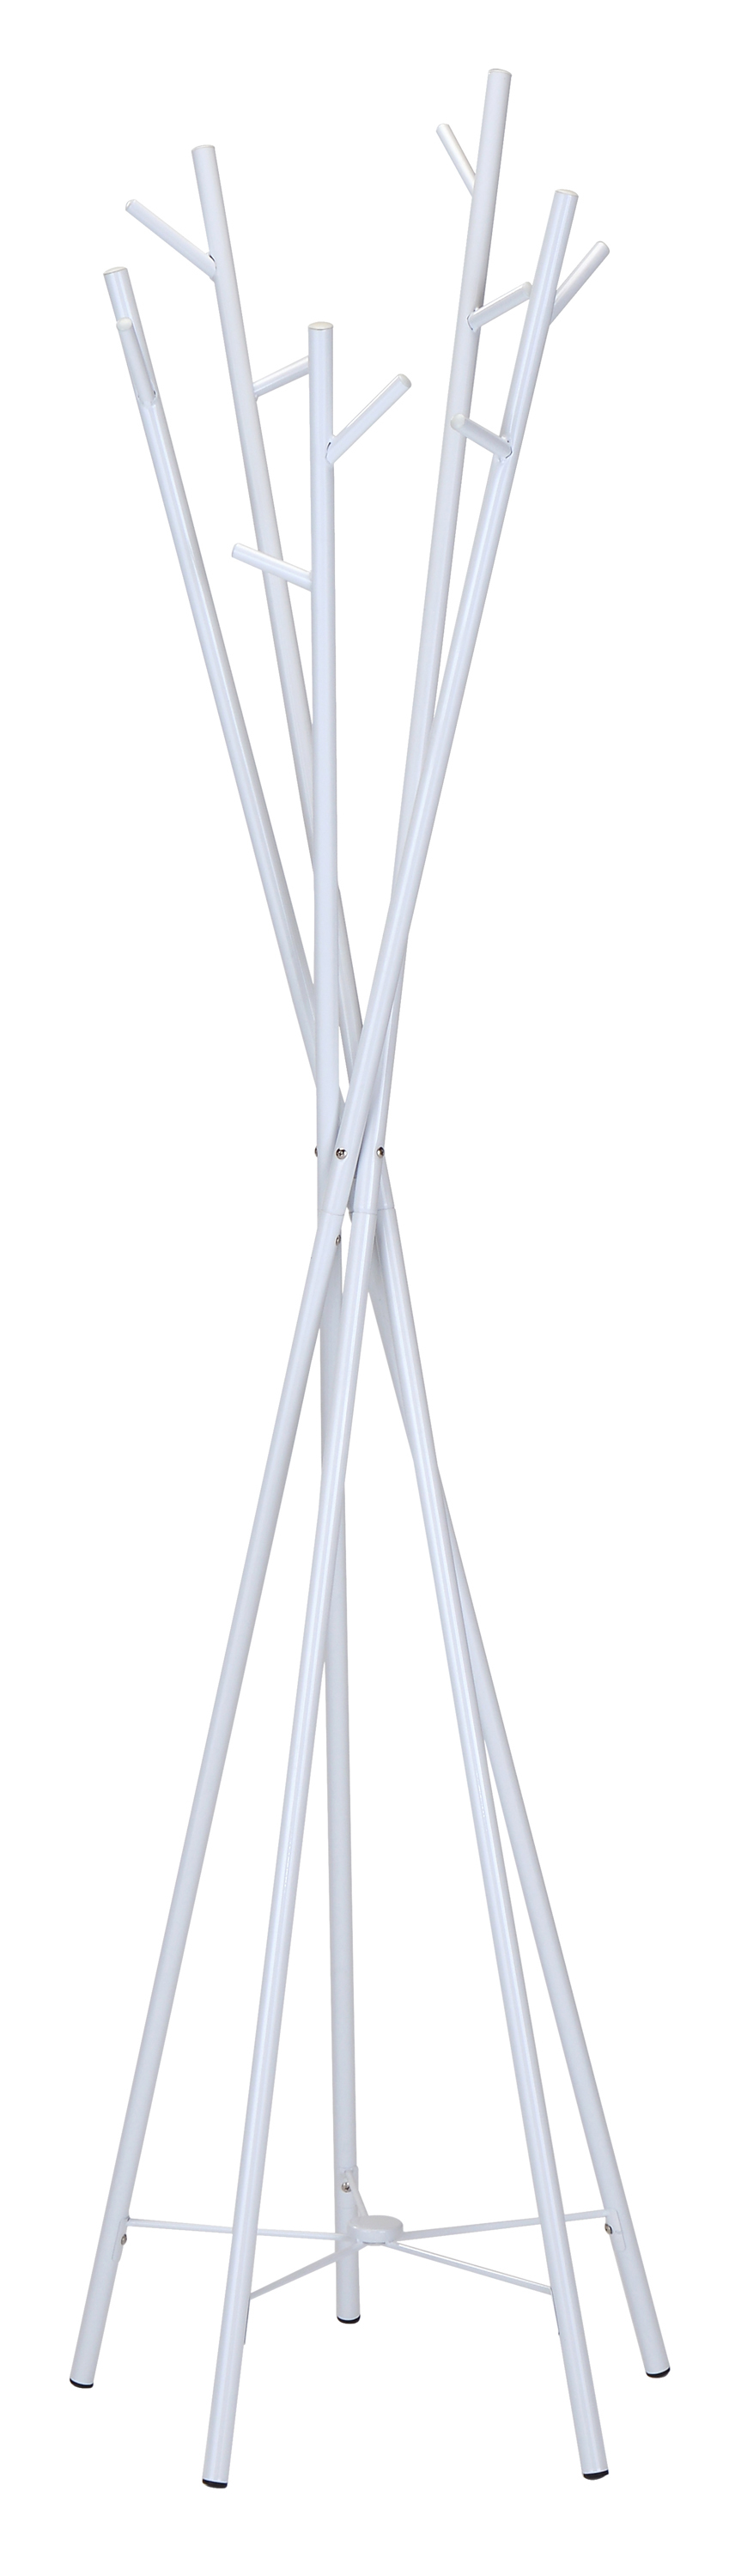 W35 hanger color: white